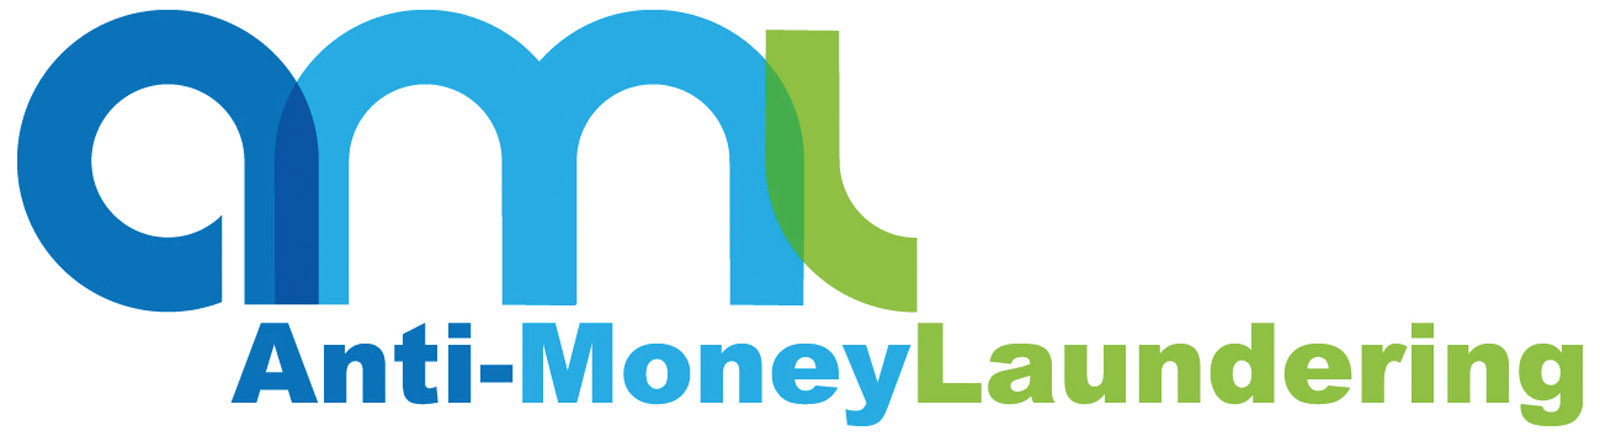 Anti-Money Laundering (logo)